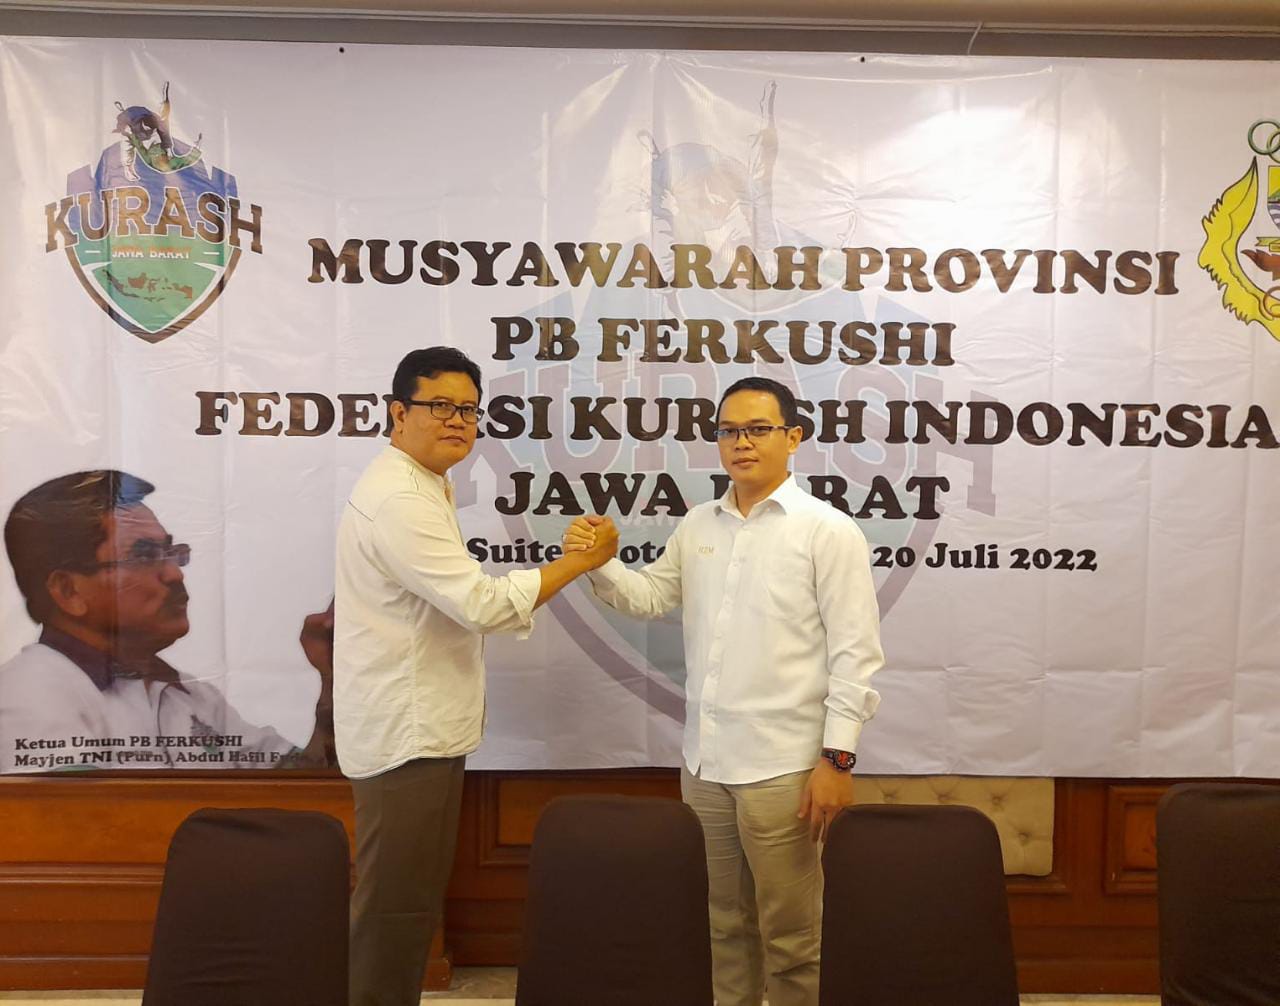 Musda Federasi Kurash Indonesia Jawa Barat,  Zaenal Muttaqin Terpilih Jadi Ketua 